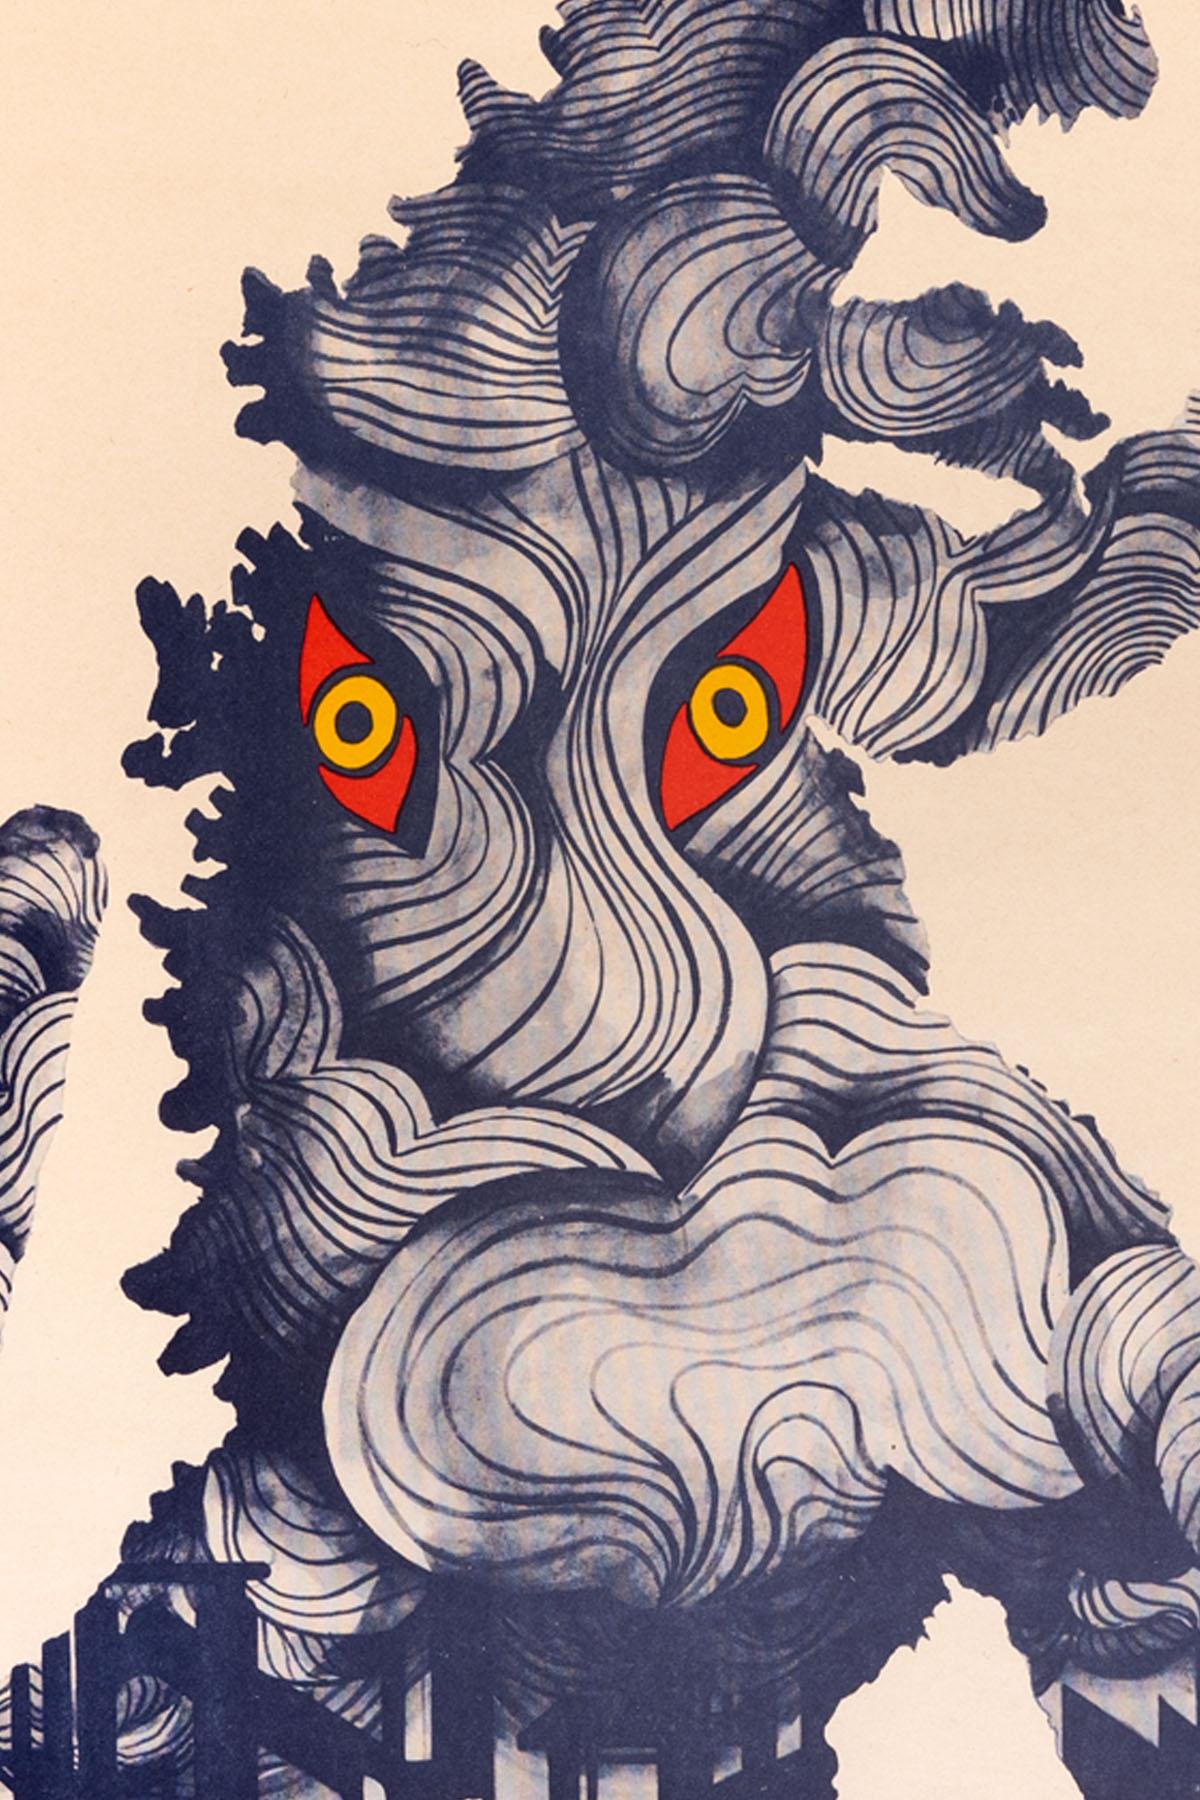 This original Polish Godzilla vs the Smog Monster movie poster was designed by Zygmunt Bobrowski in 1972.